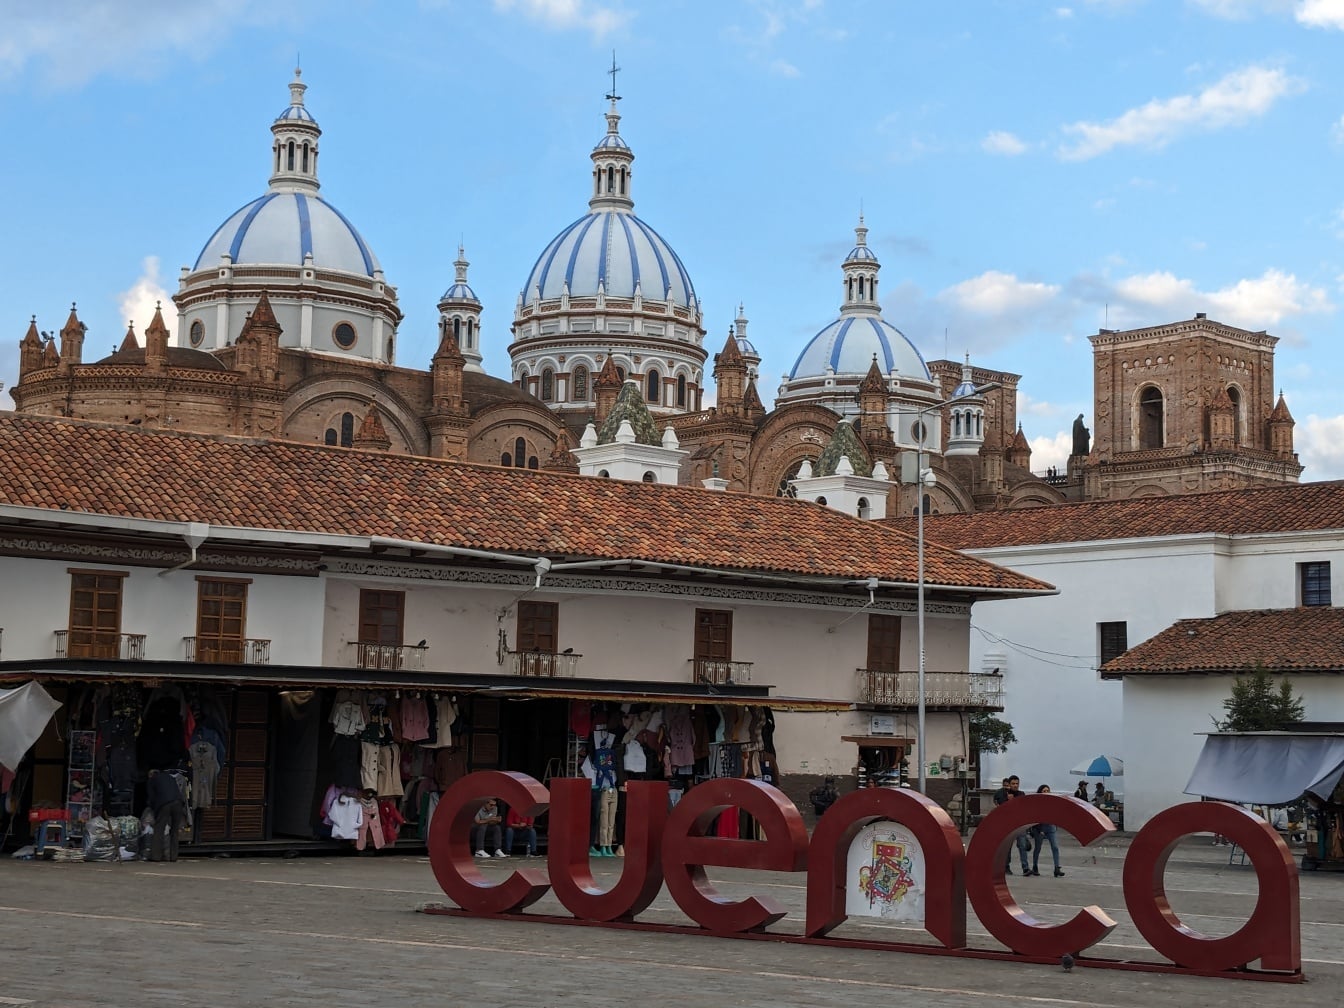 Plaza San Francisco Cuencan keskustassa Ecuadorissa, Unescon maailmanperintökohde